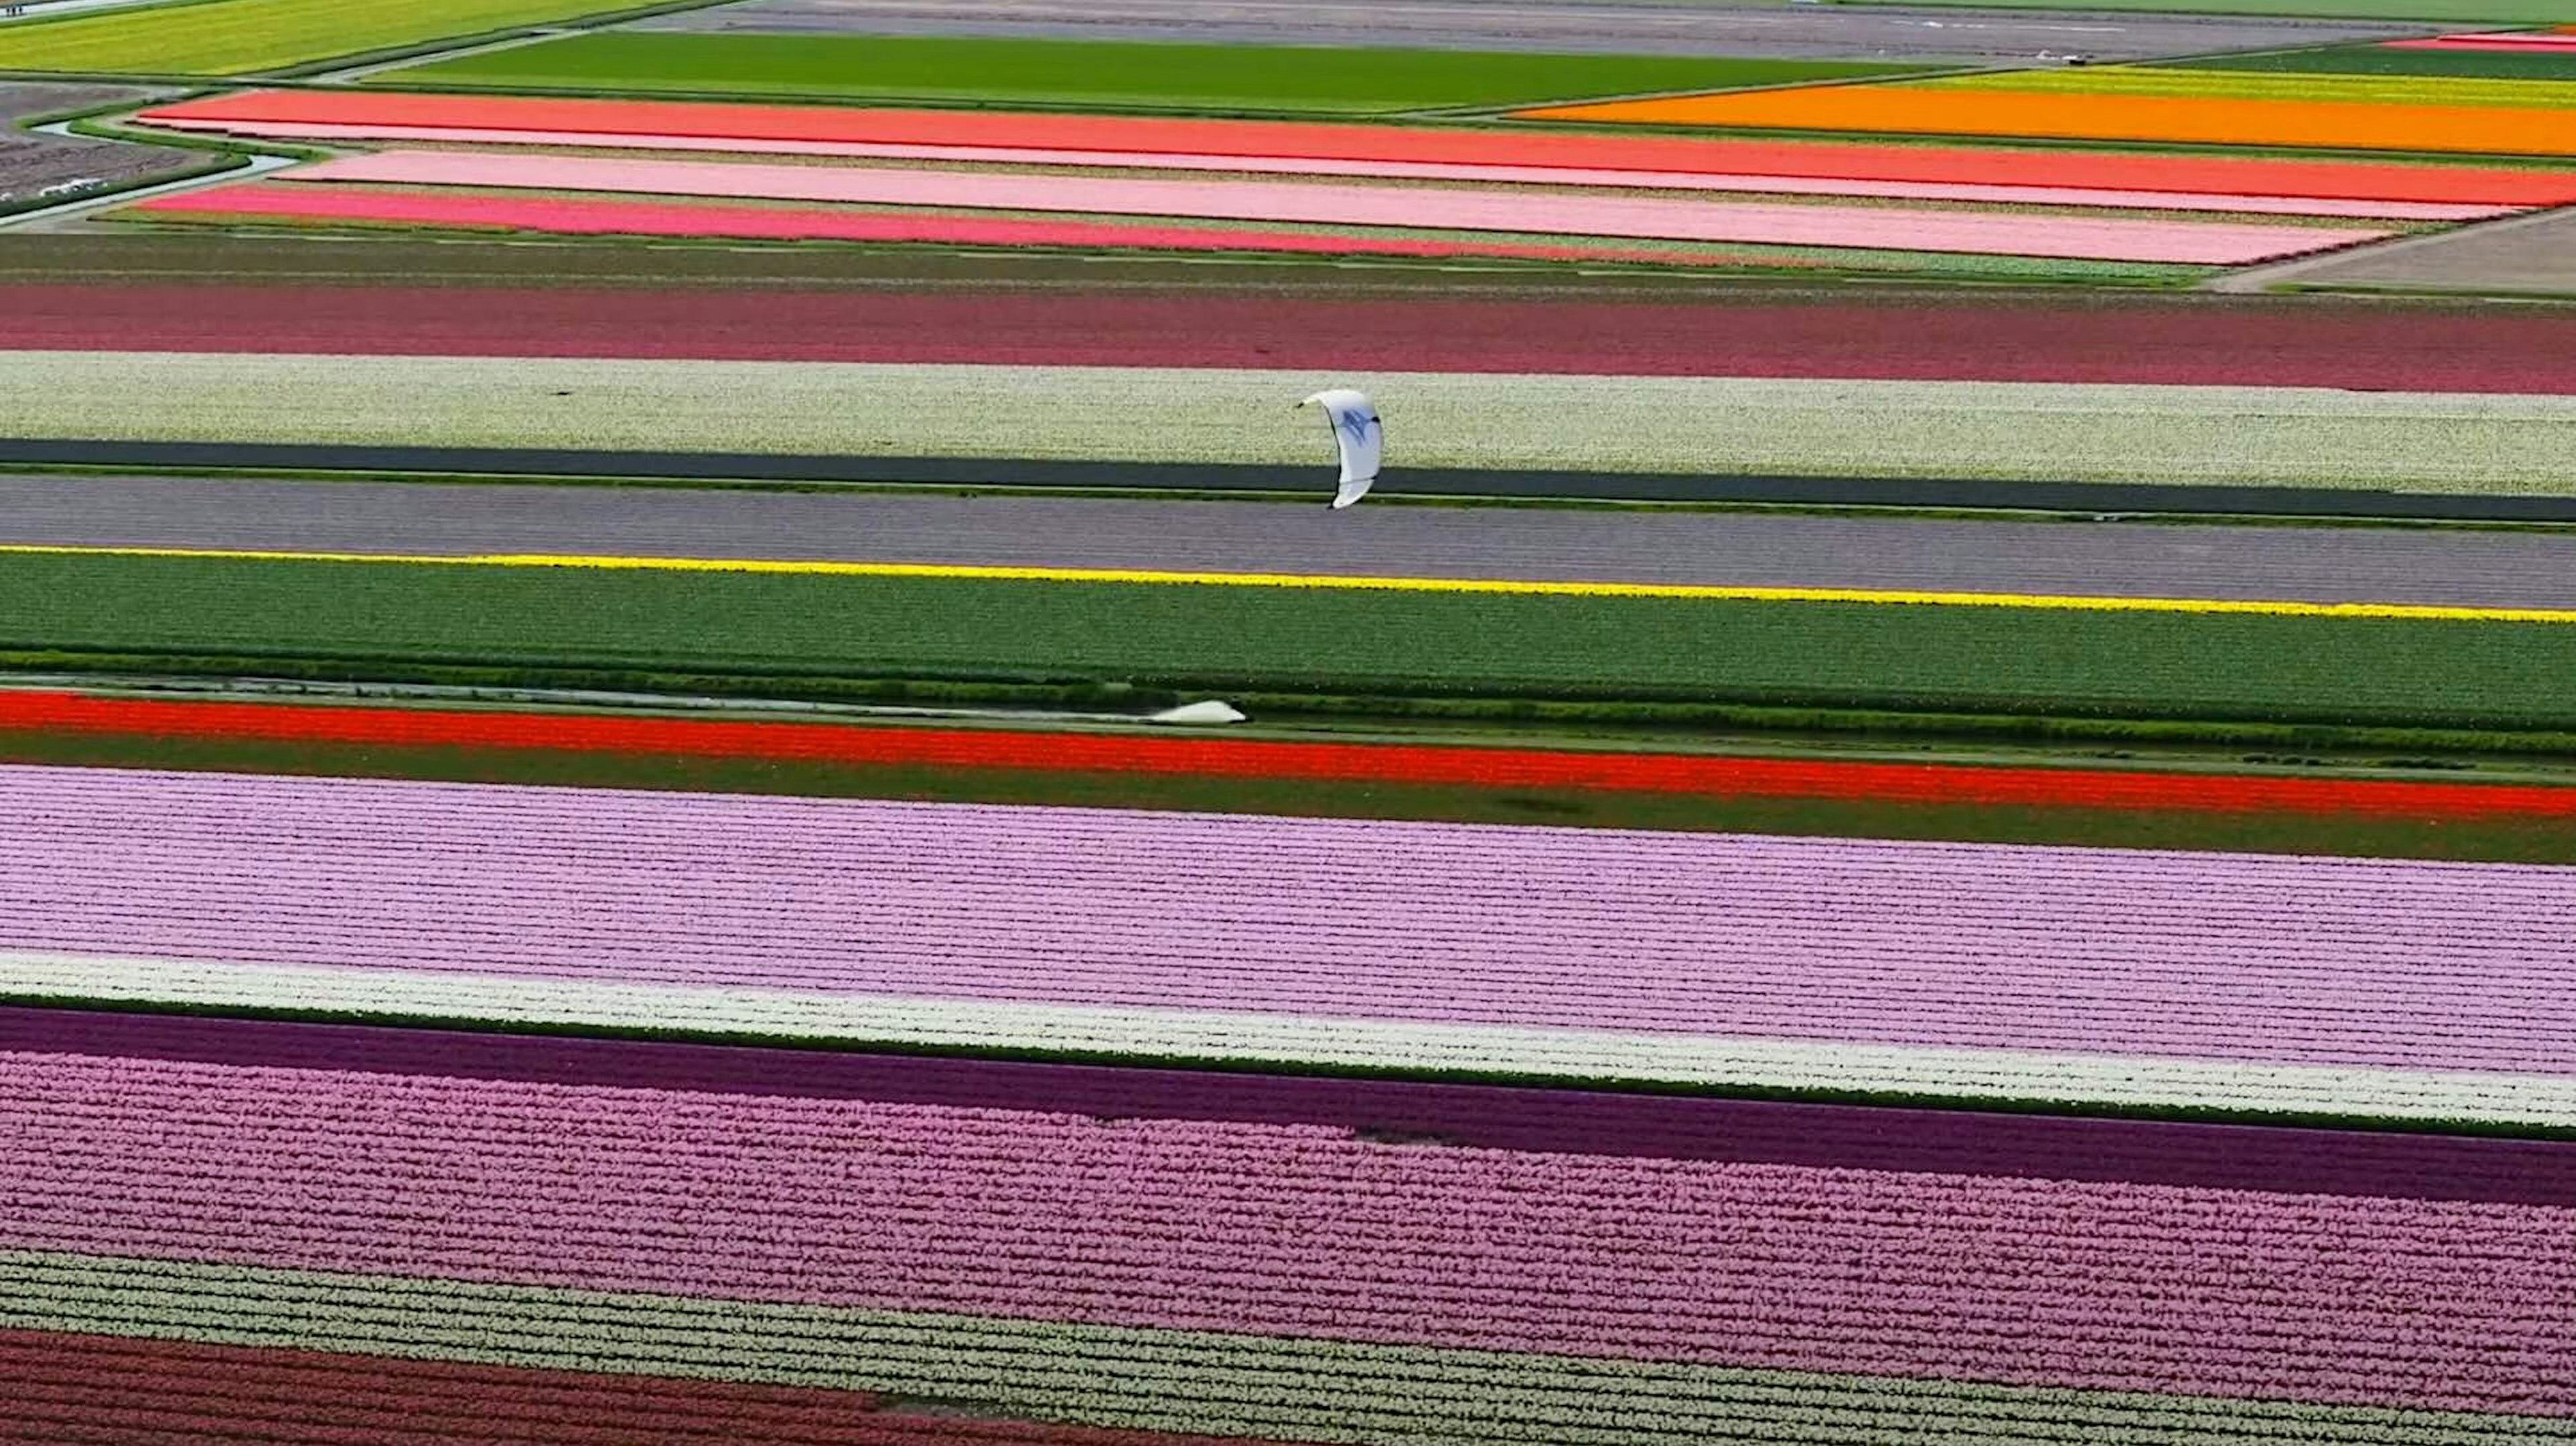 Kiting-in-fields-of-tulips